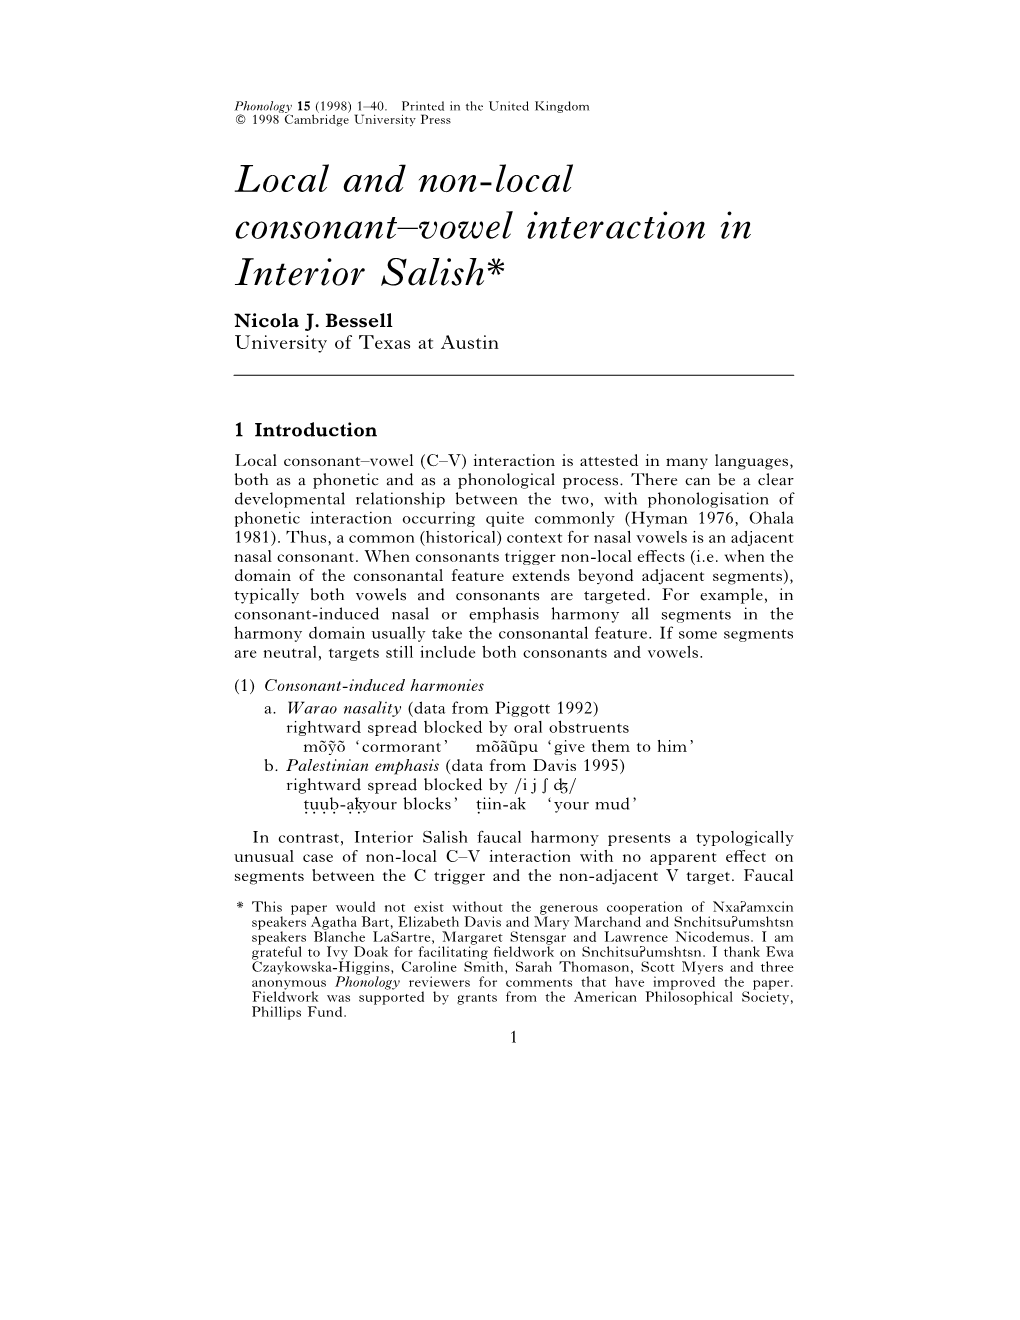 Local and Non-Local Consonant–Vowel Interaction in Interior Salish* Nicola J